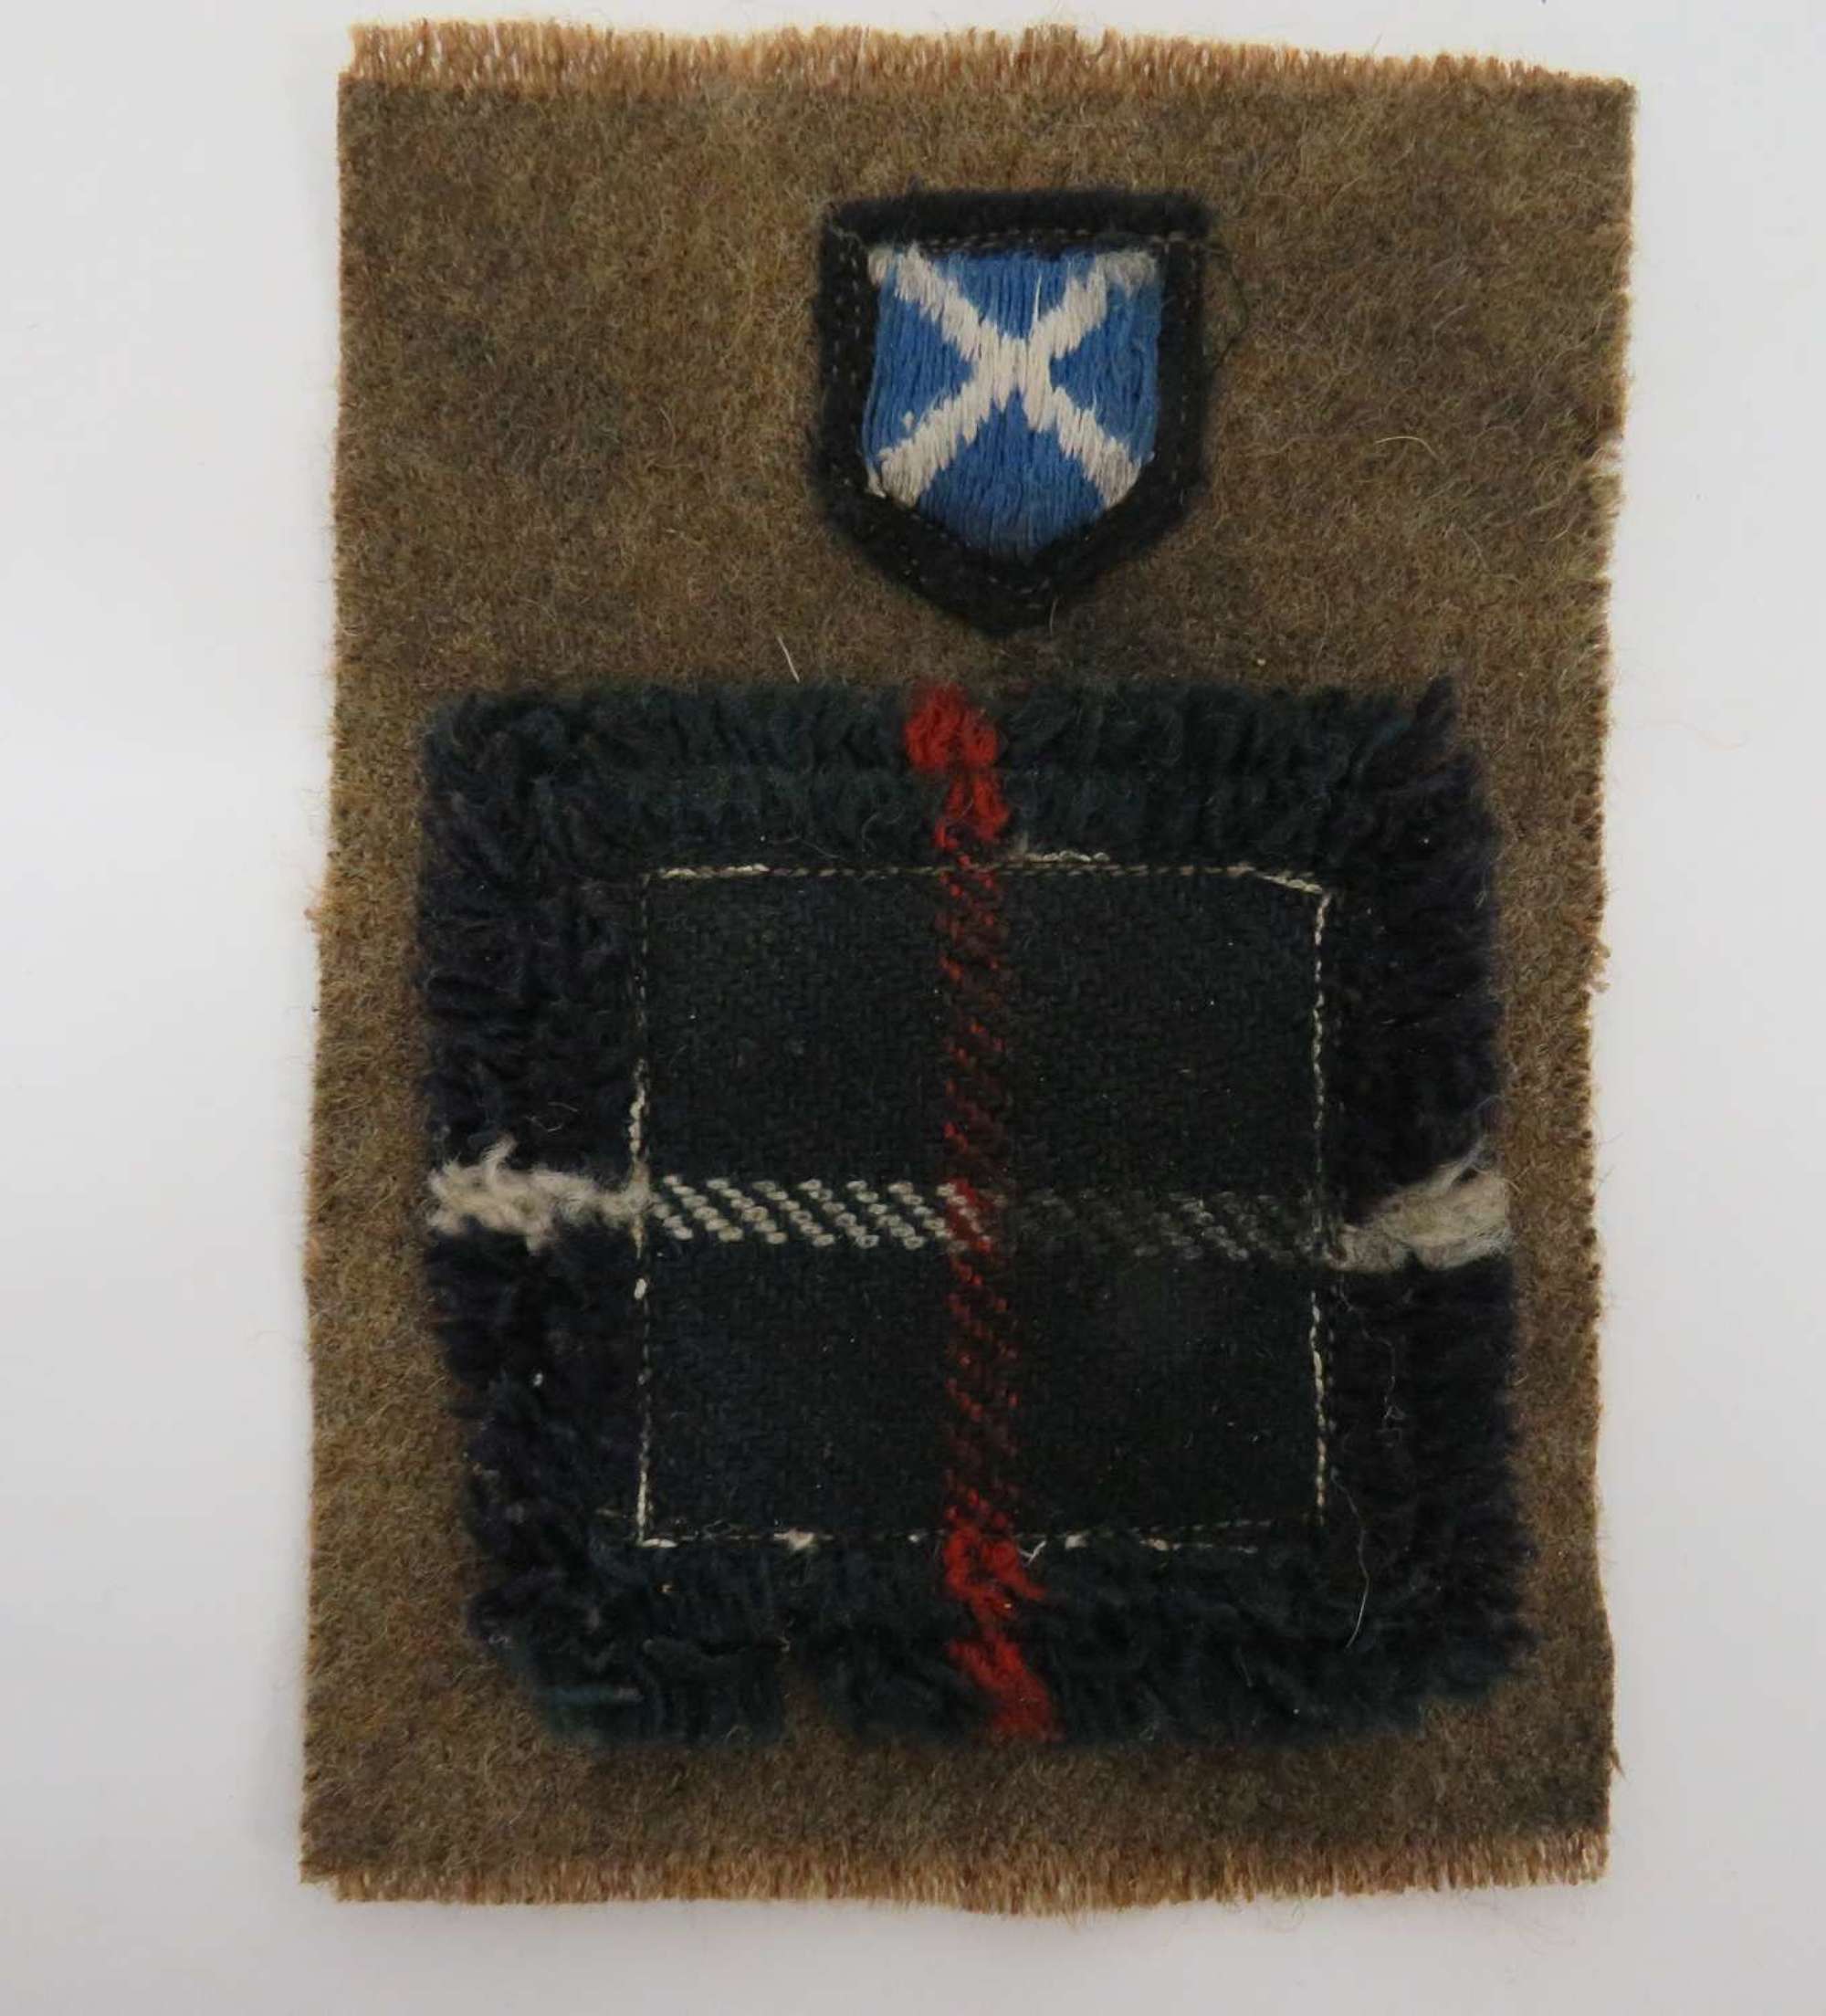 52nd Scottish Infantry Battle Badge